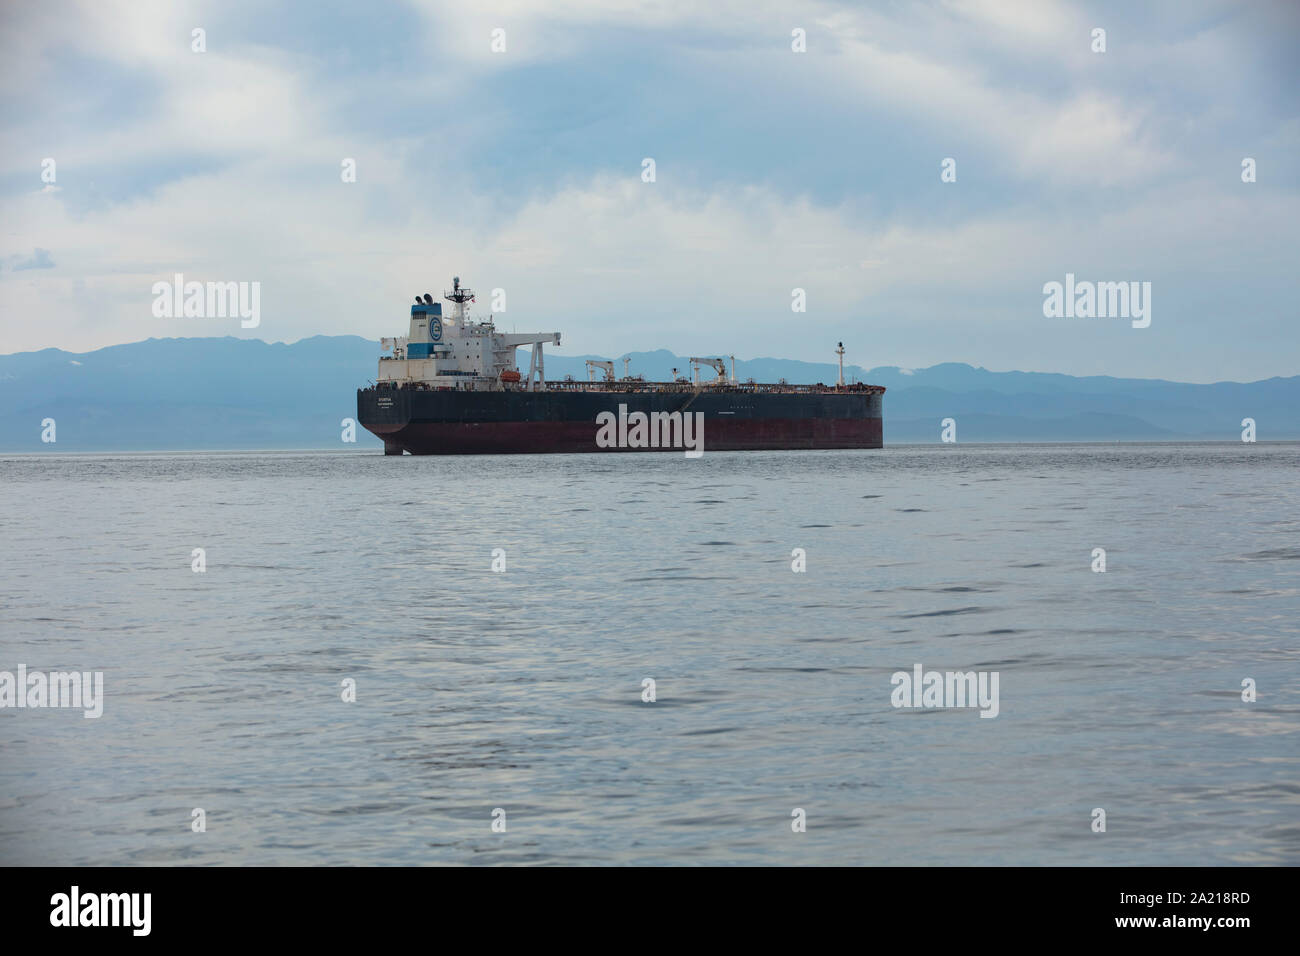 Tanker Ship on the sea Stock Photo